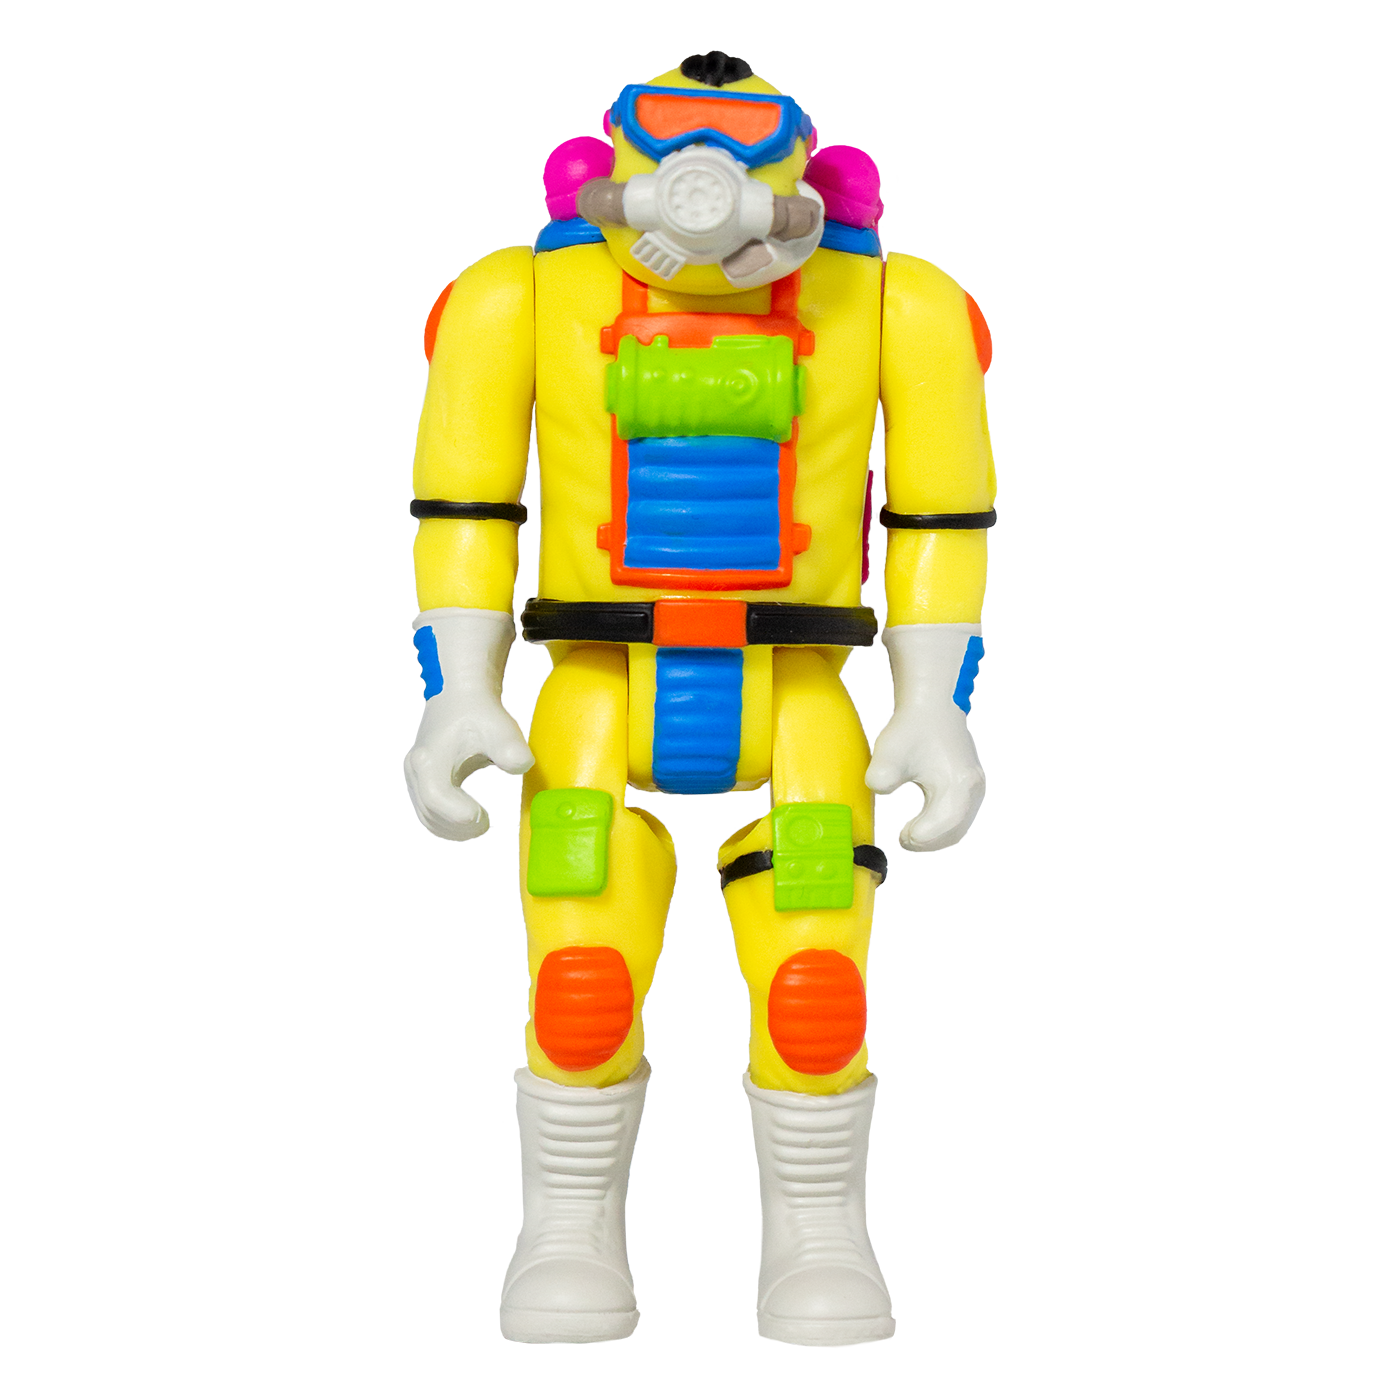 Toxic Crusaders ReAction Figure - Radiation Ranger